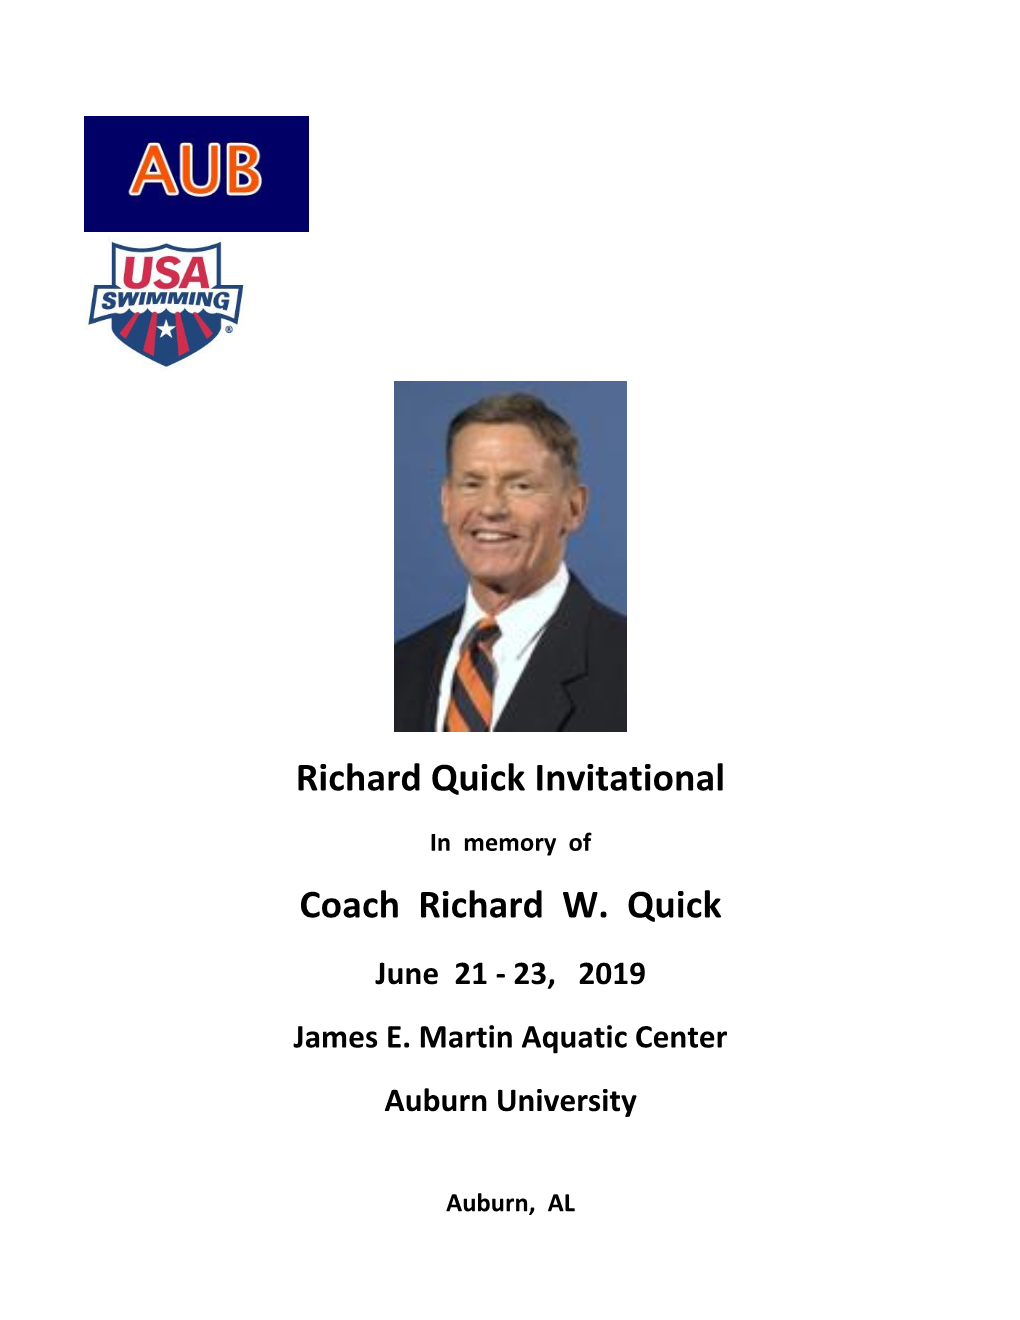 Richard Quick Invitational Coach Richard W. Quick